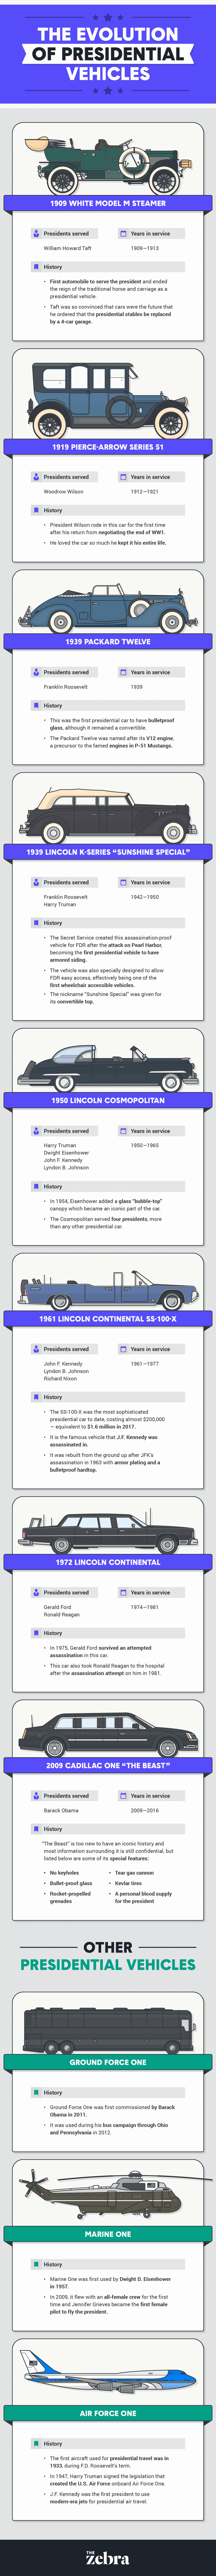 historical presidential cars